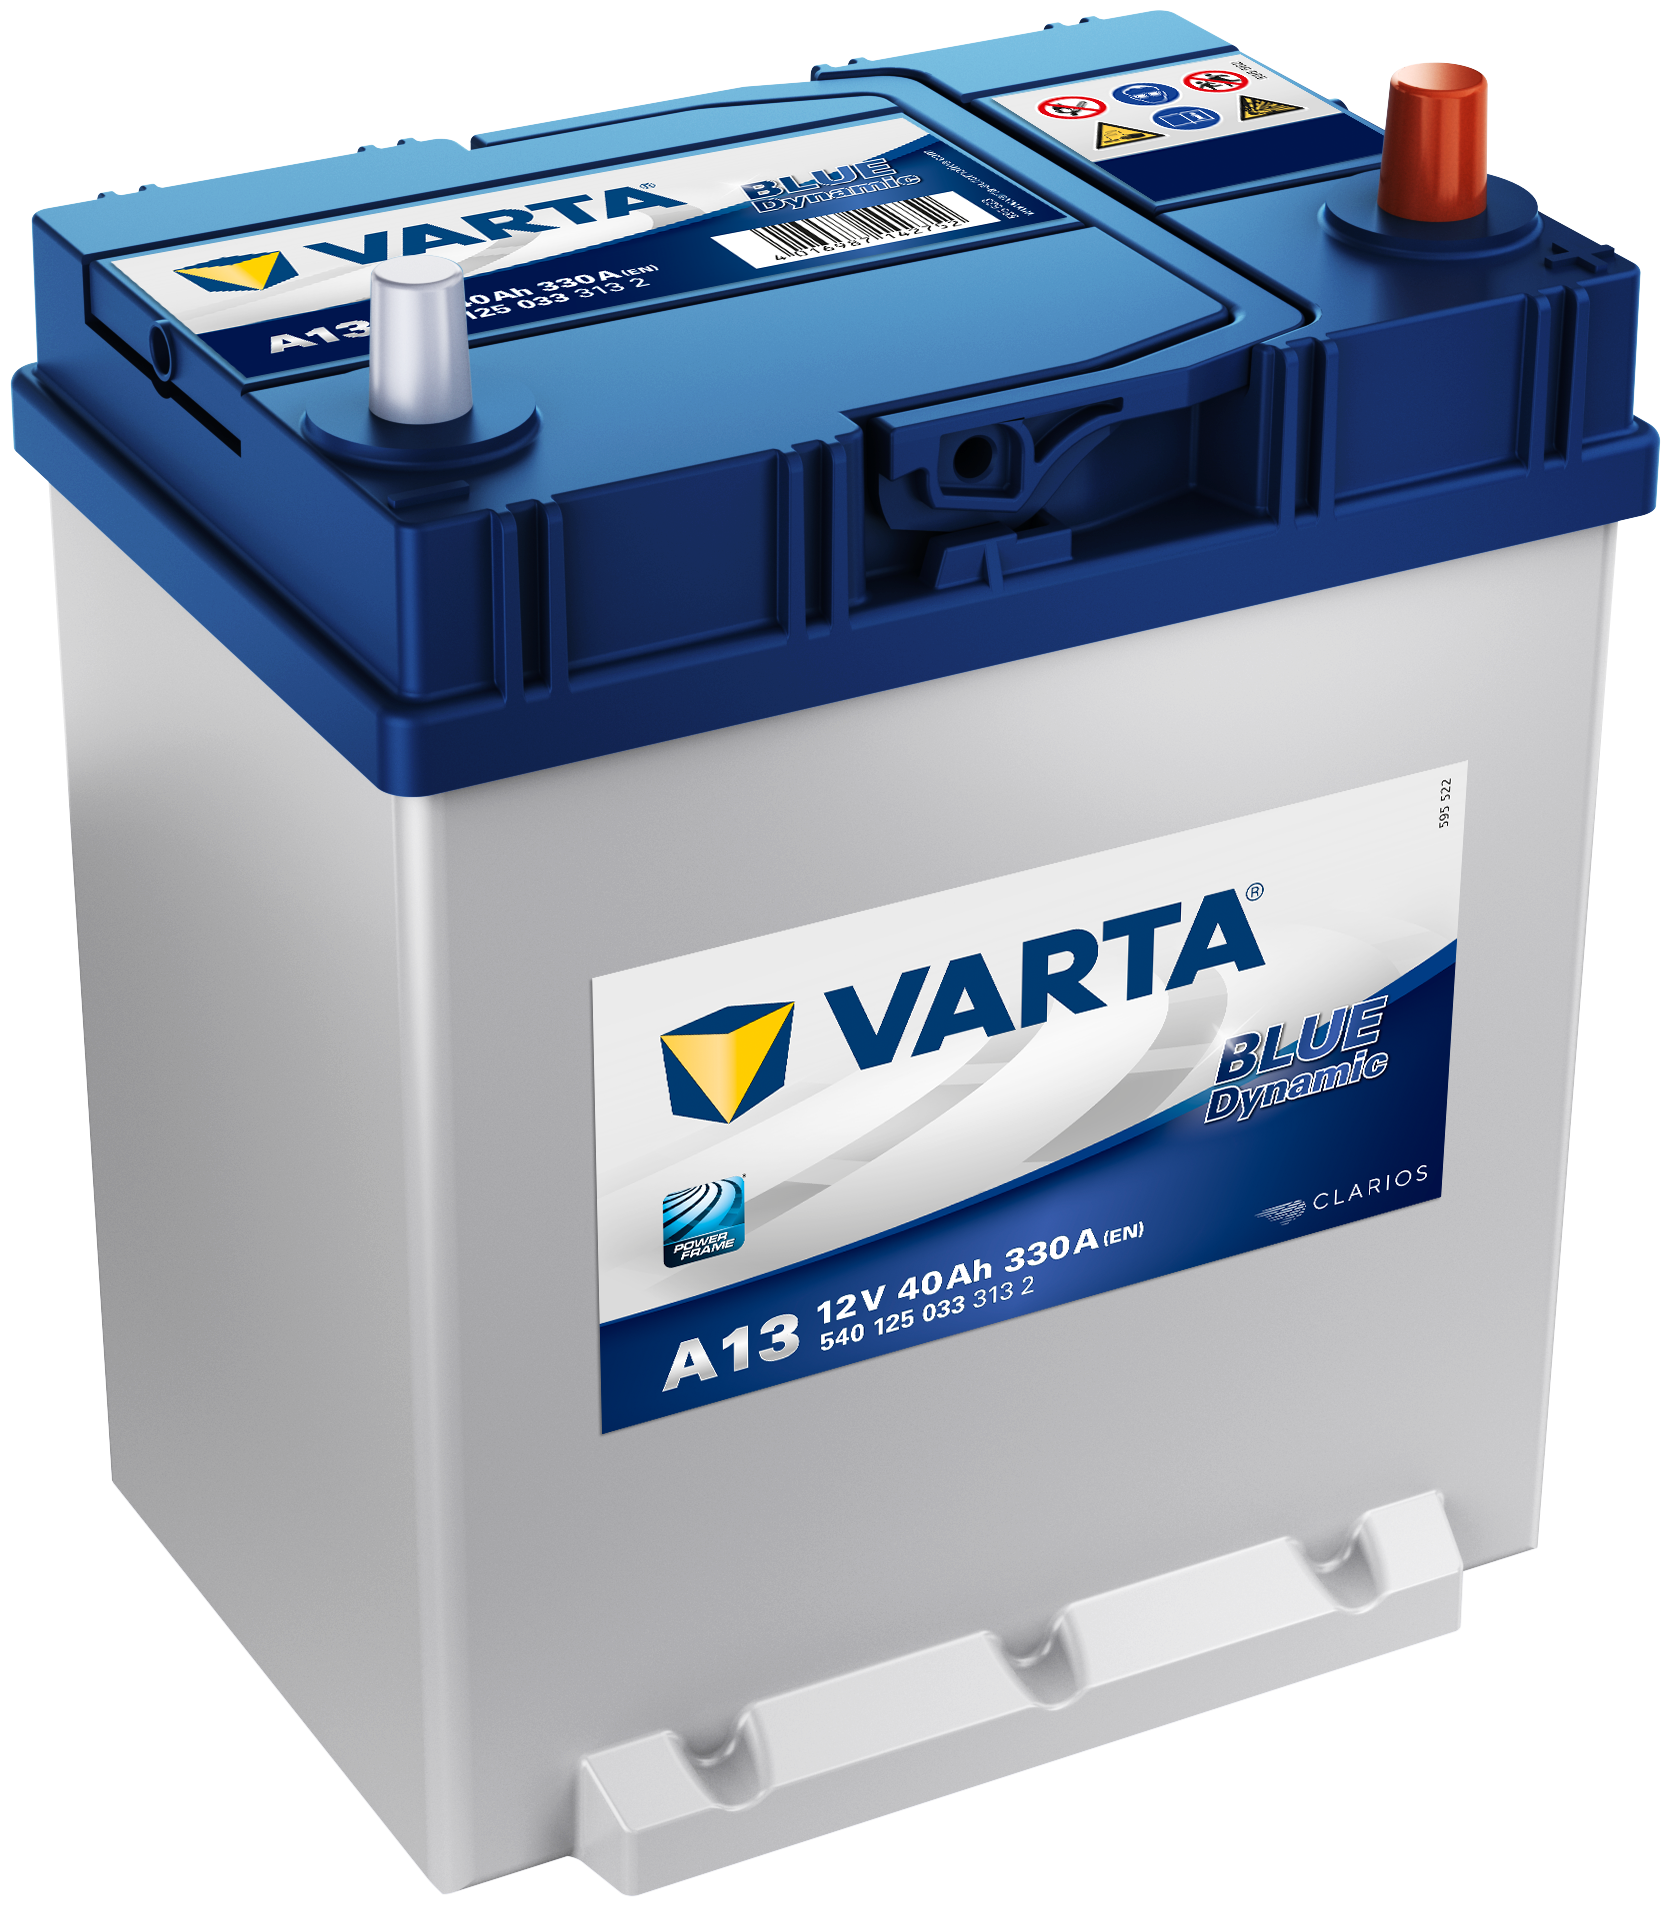 Автомобильный аккумулятор VARTA Blue Dynamic A13 (540 125 033) 187х127х227